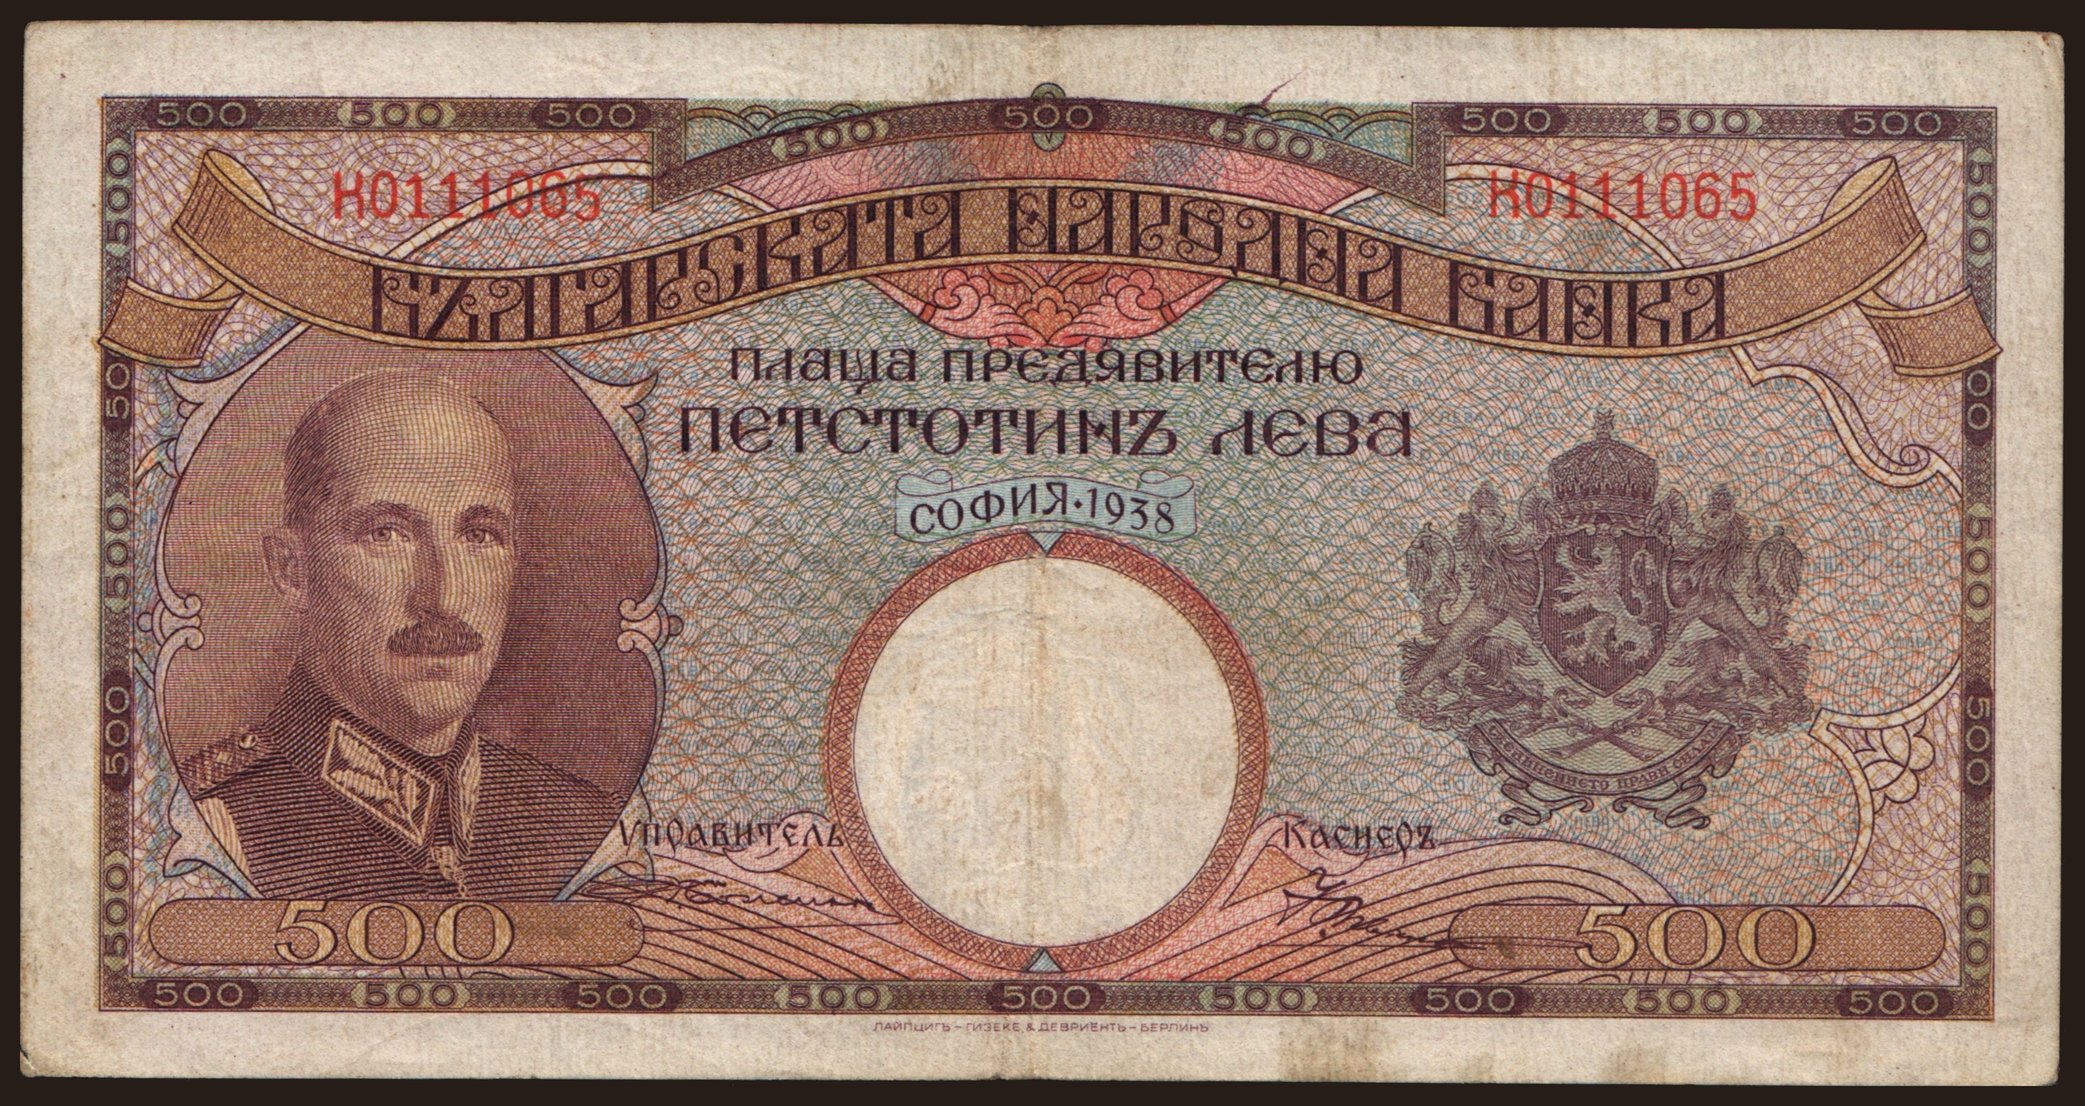 500 leva, 1938